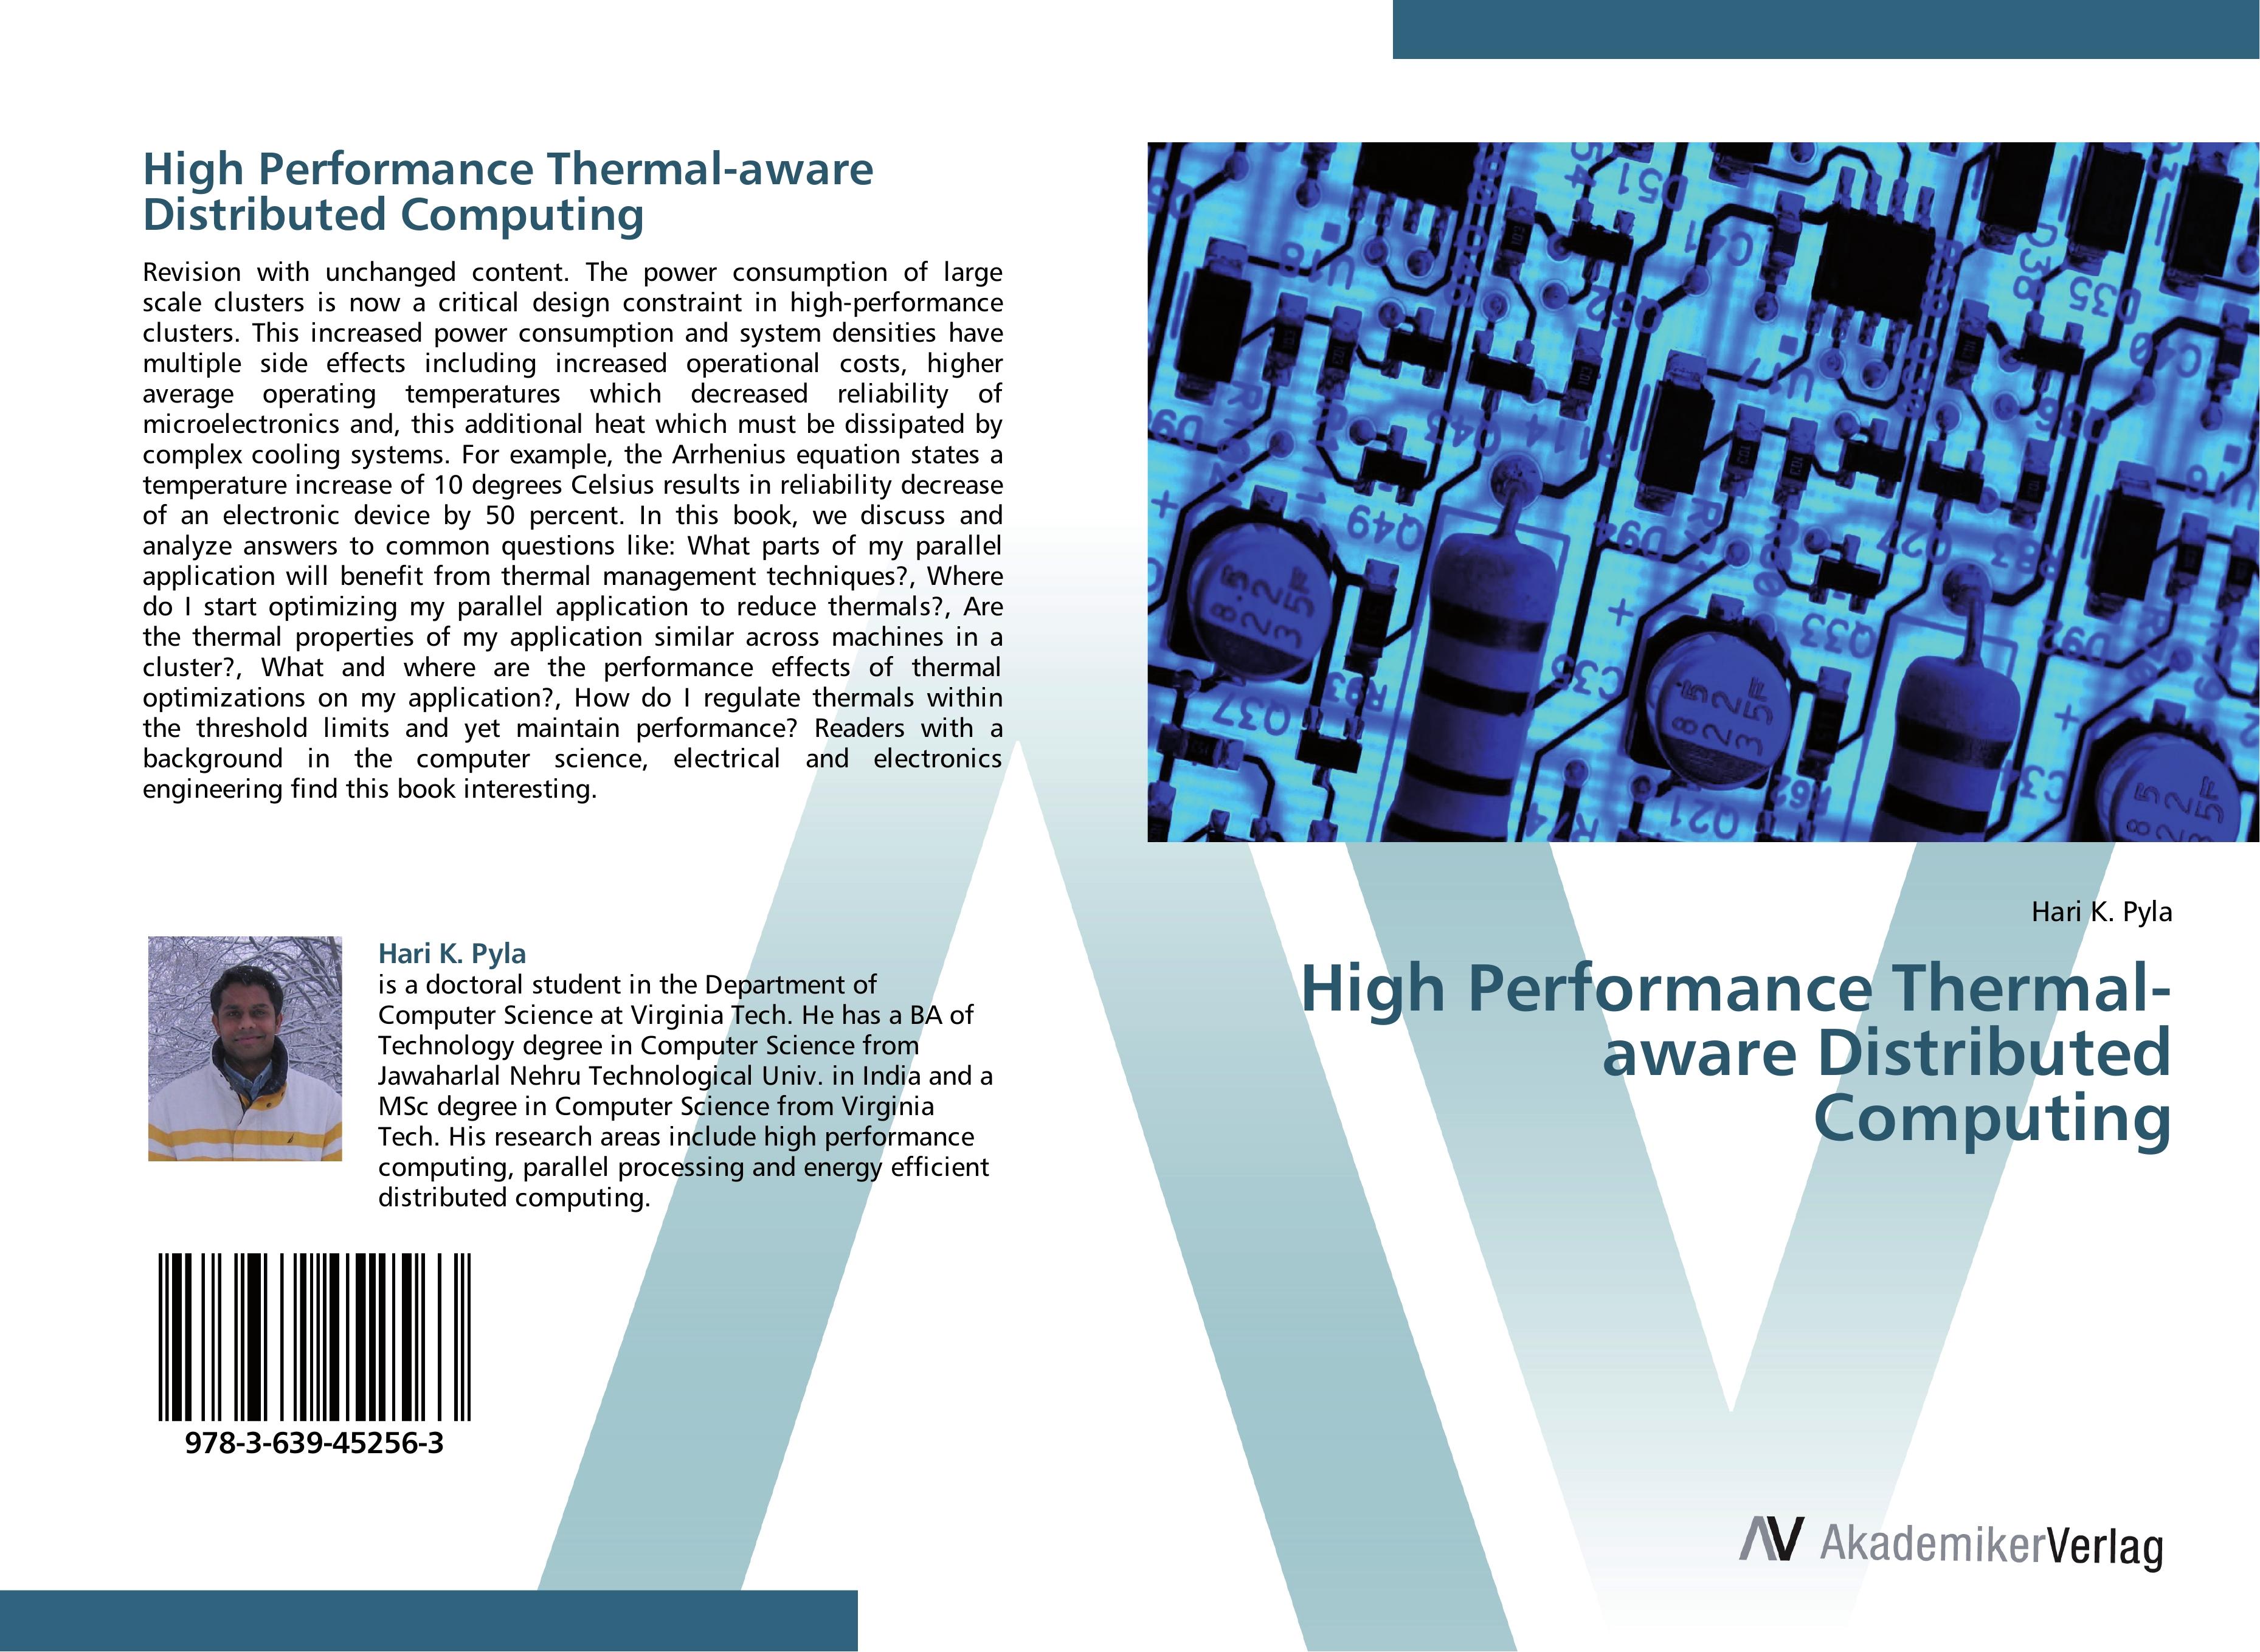 High Performance Thermal-aware Distributed Computing - Hari K. Pyla